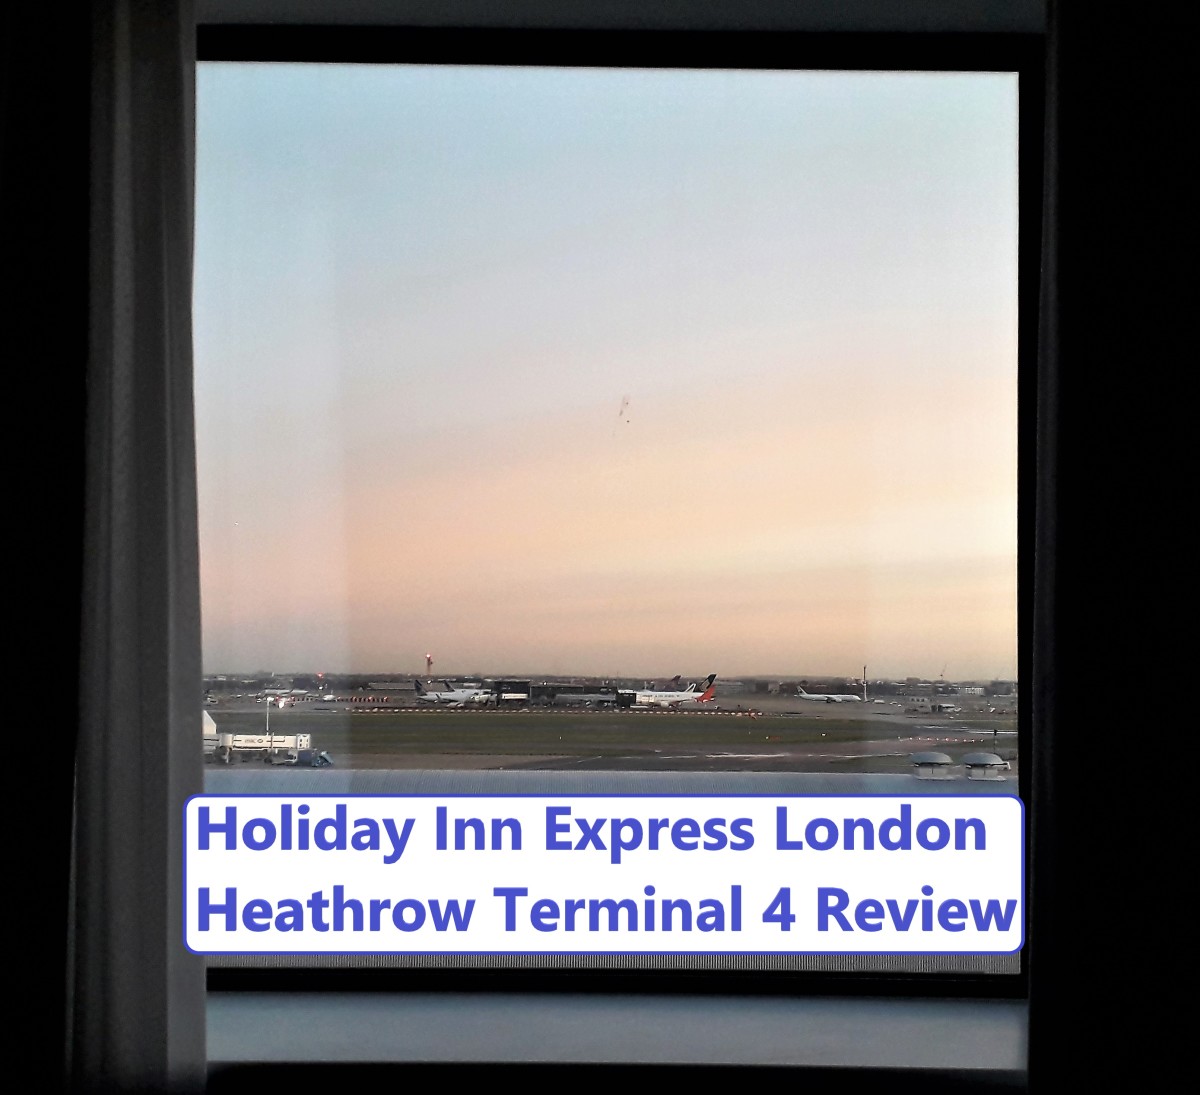 Holiday Inn Express London Heathrow Terminal 4 Review